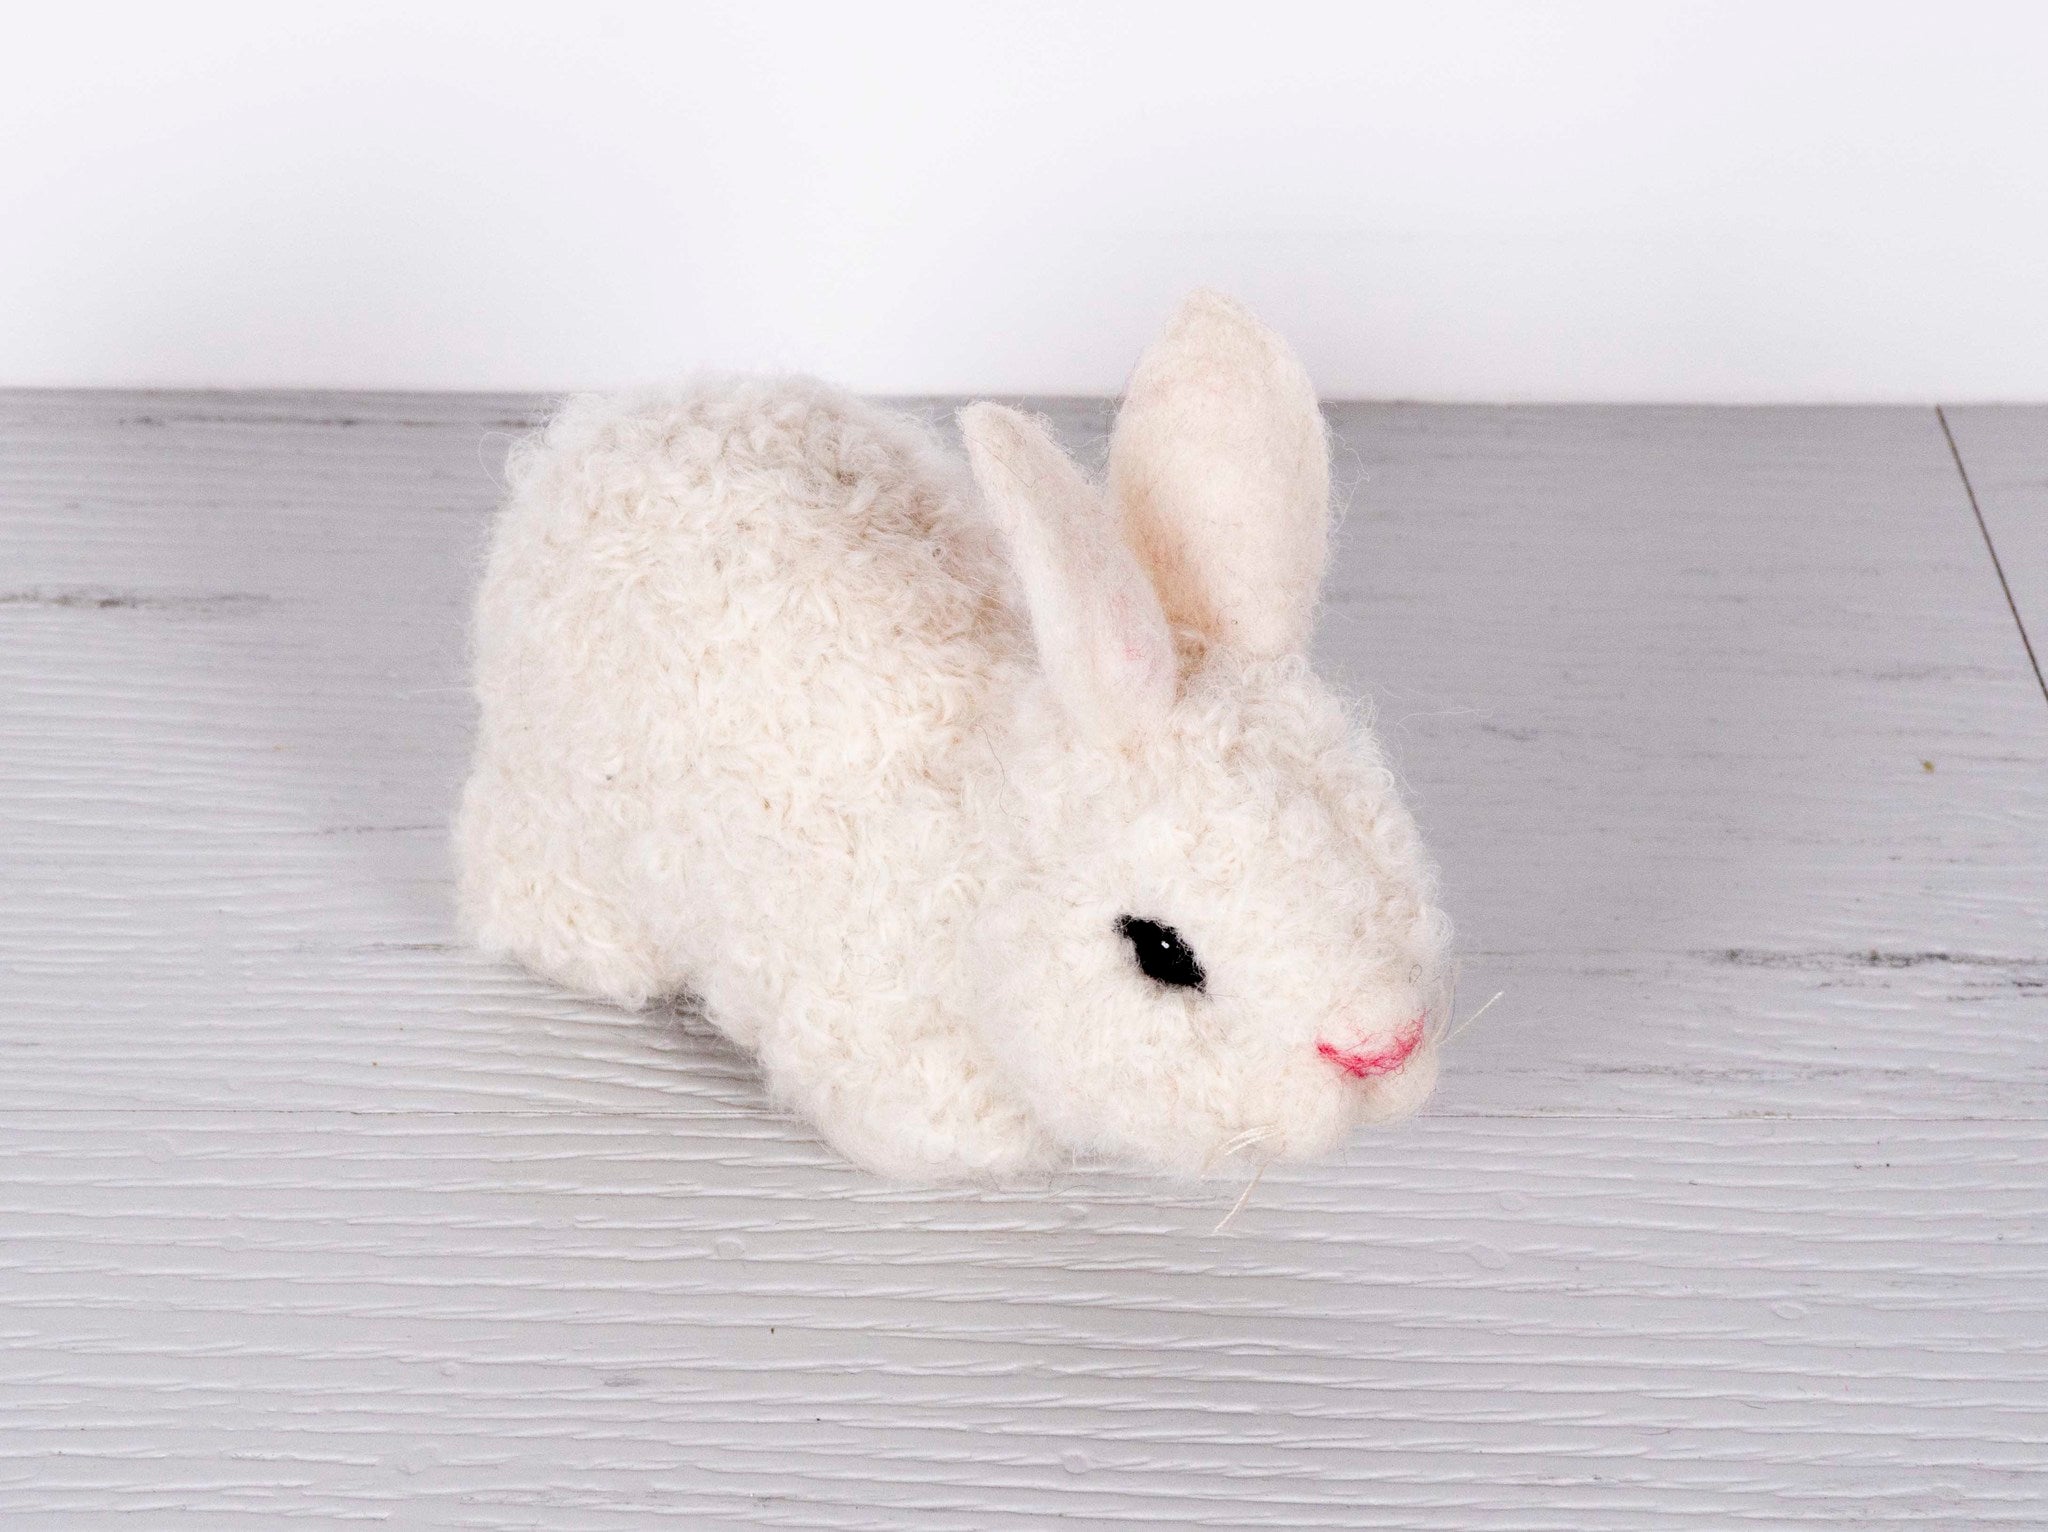 Needle Felted Bunny Rabbit Figurine- Alpaca Wool